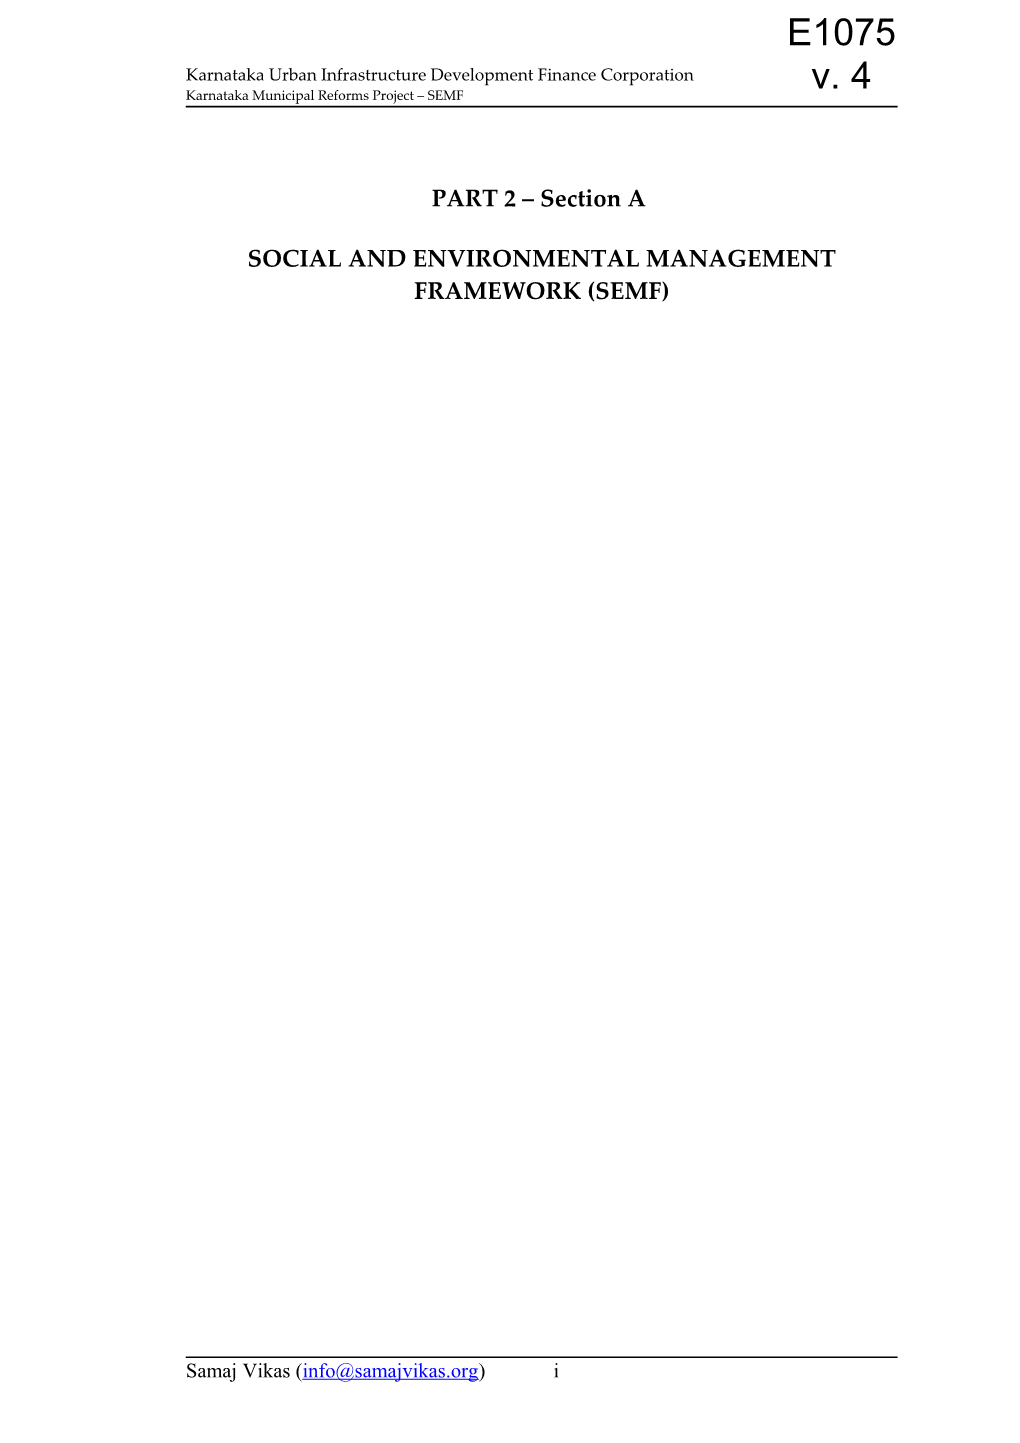 Social and Environmental Management Framework (Semf)